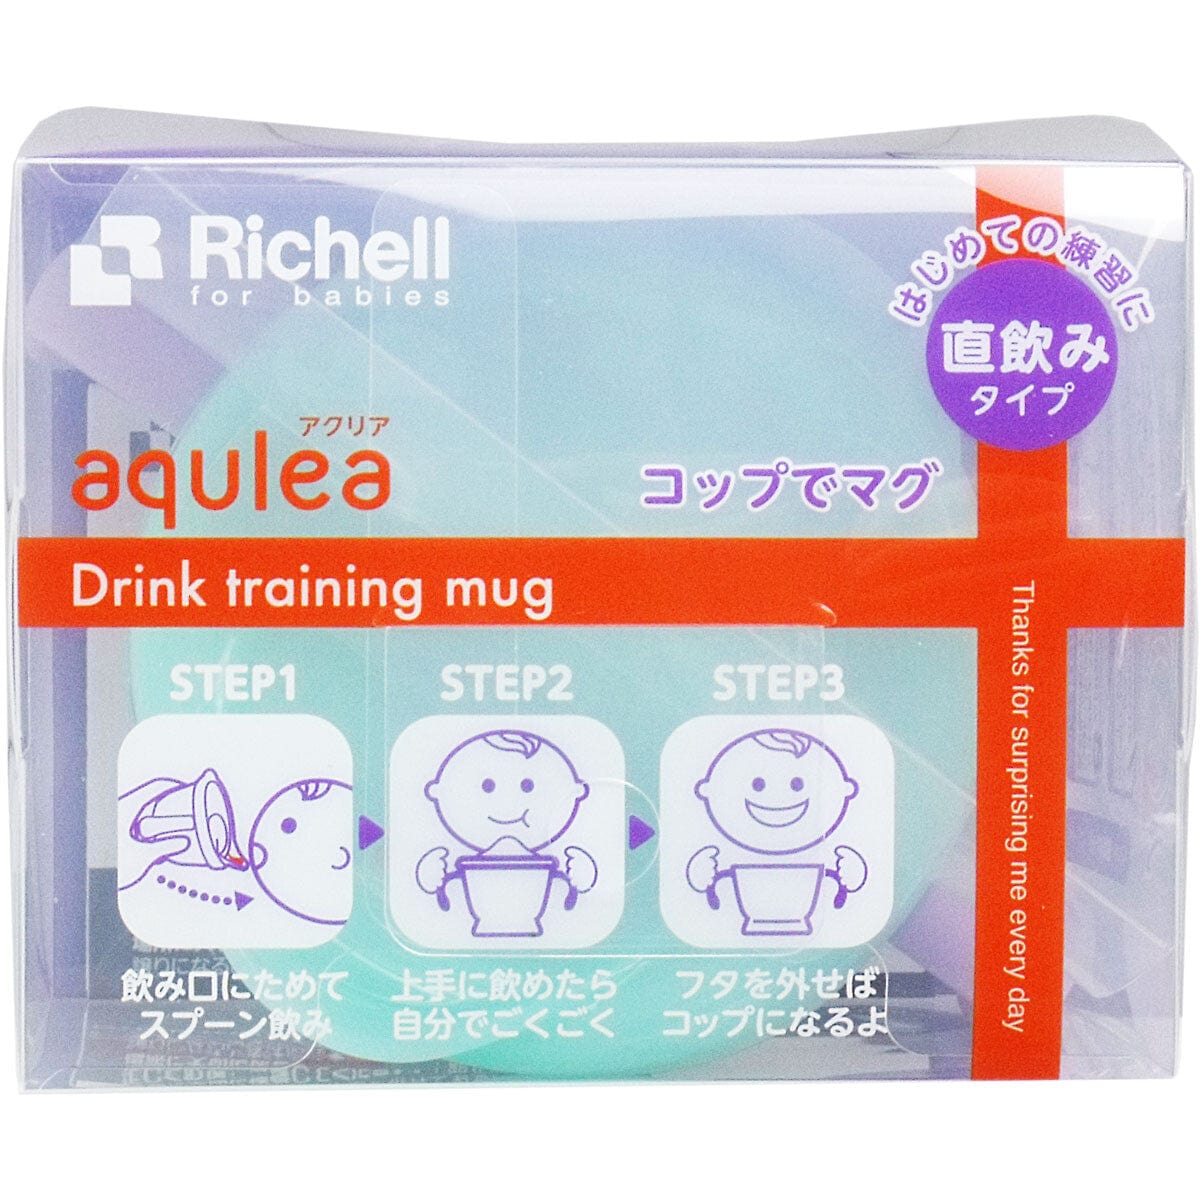 Richell - Aqulea Baby Direct Drinking Training Water Mug -  Baby Cup  Durio.sg